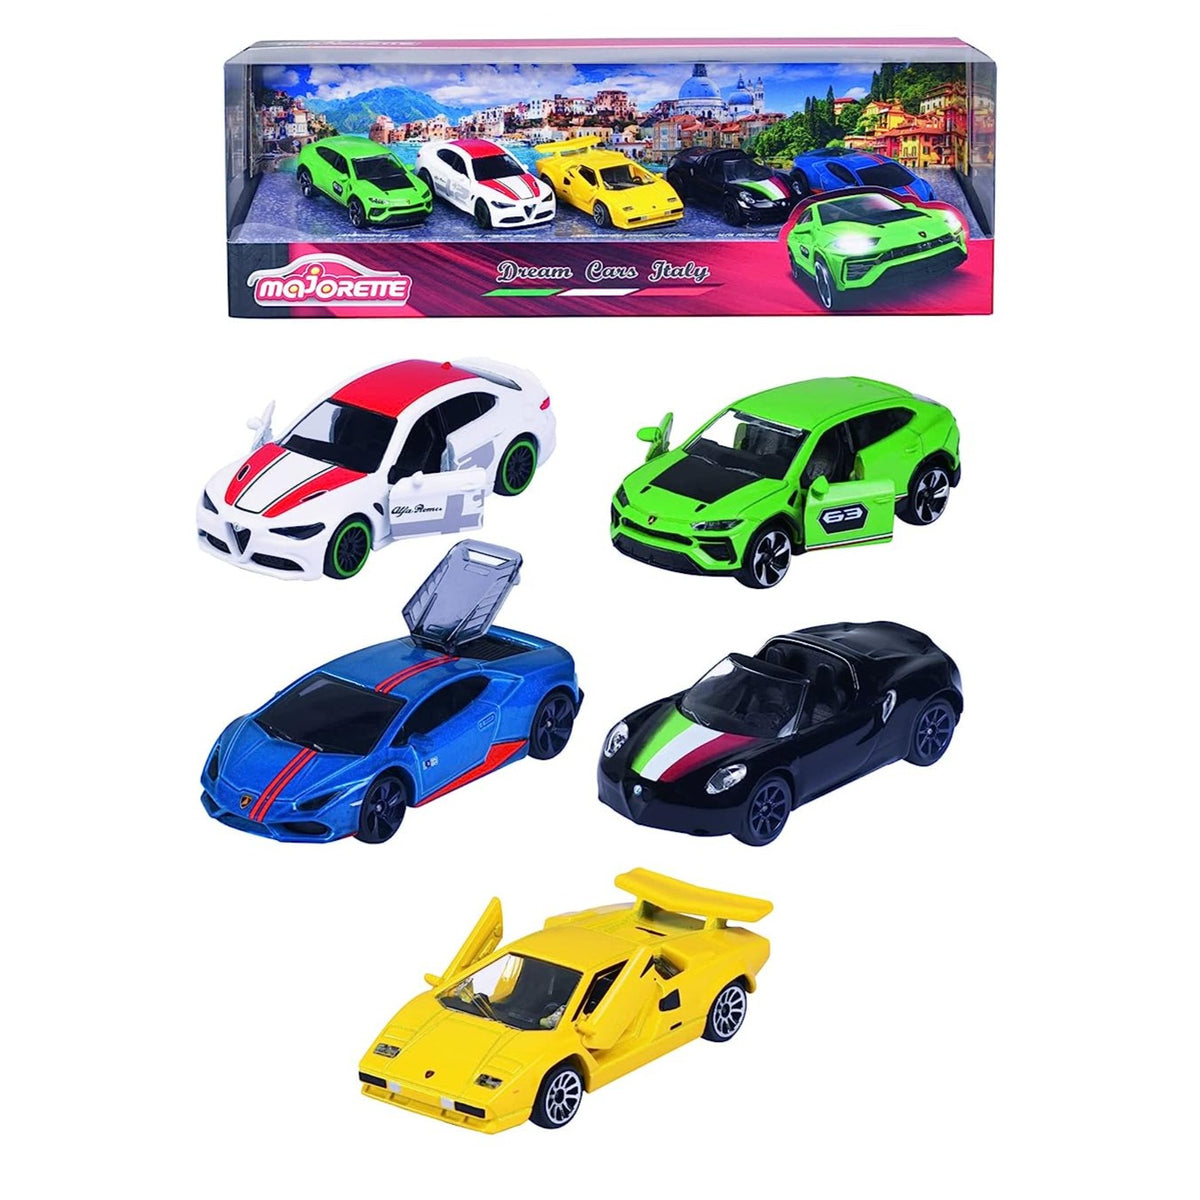 Majorette Dream Italian Vehicles Series 5 Car Gift Set For Kids Ages 3+